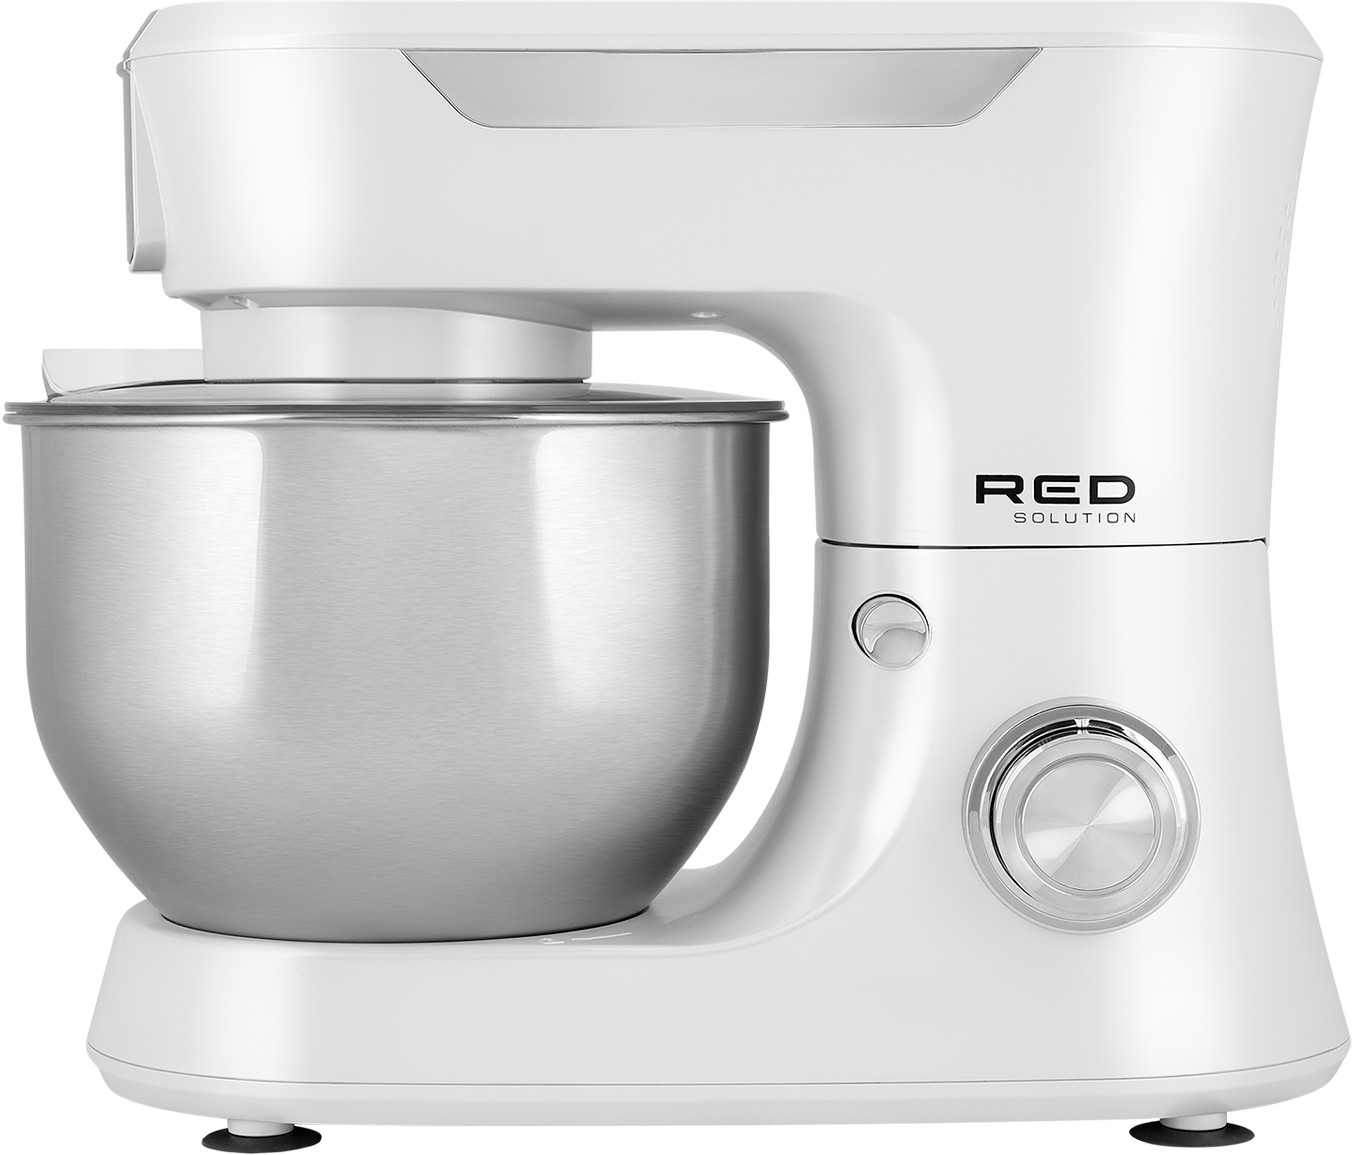 

Кухонная машина RED Solution RKM-4050